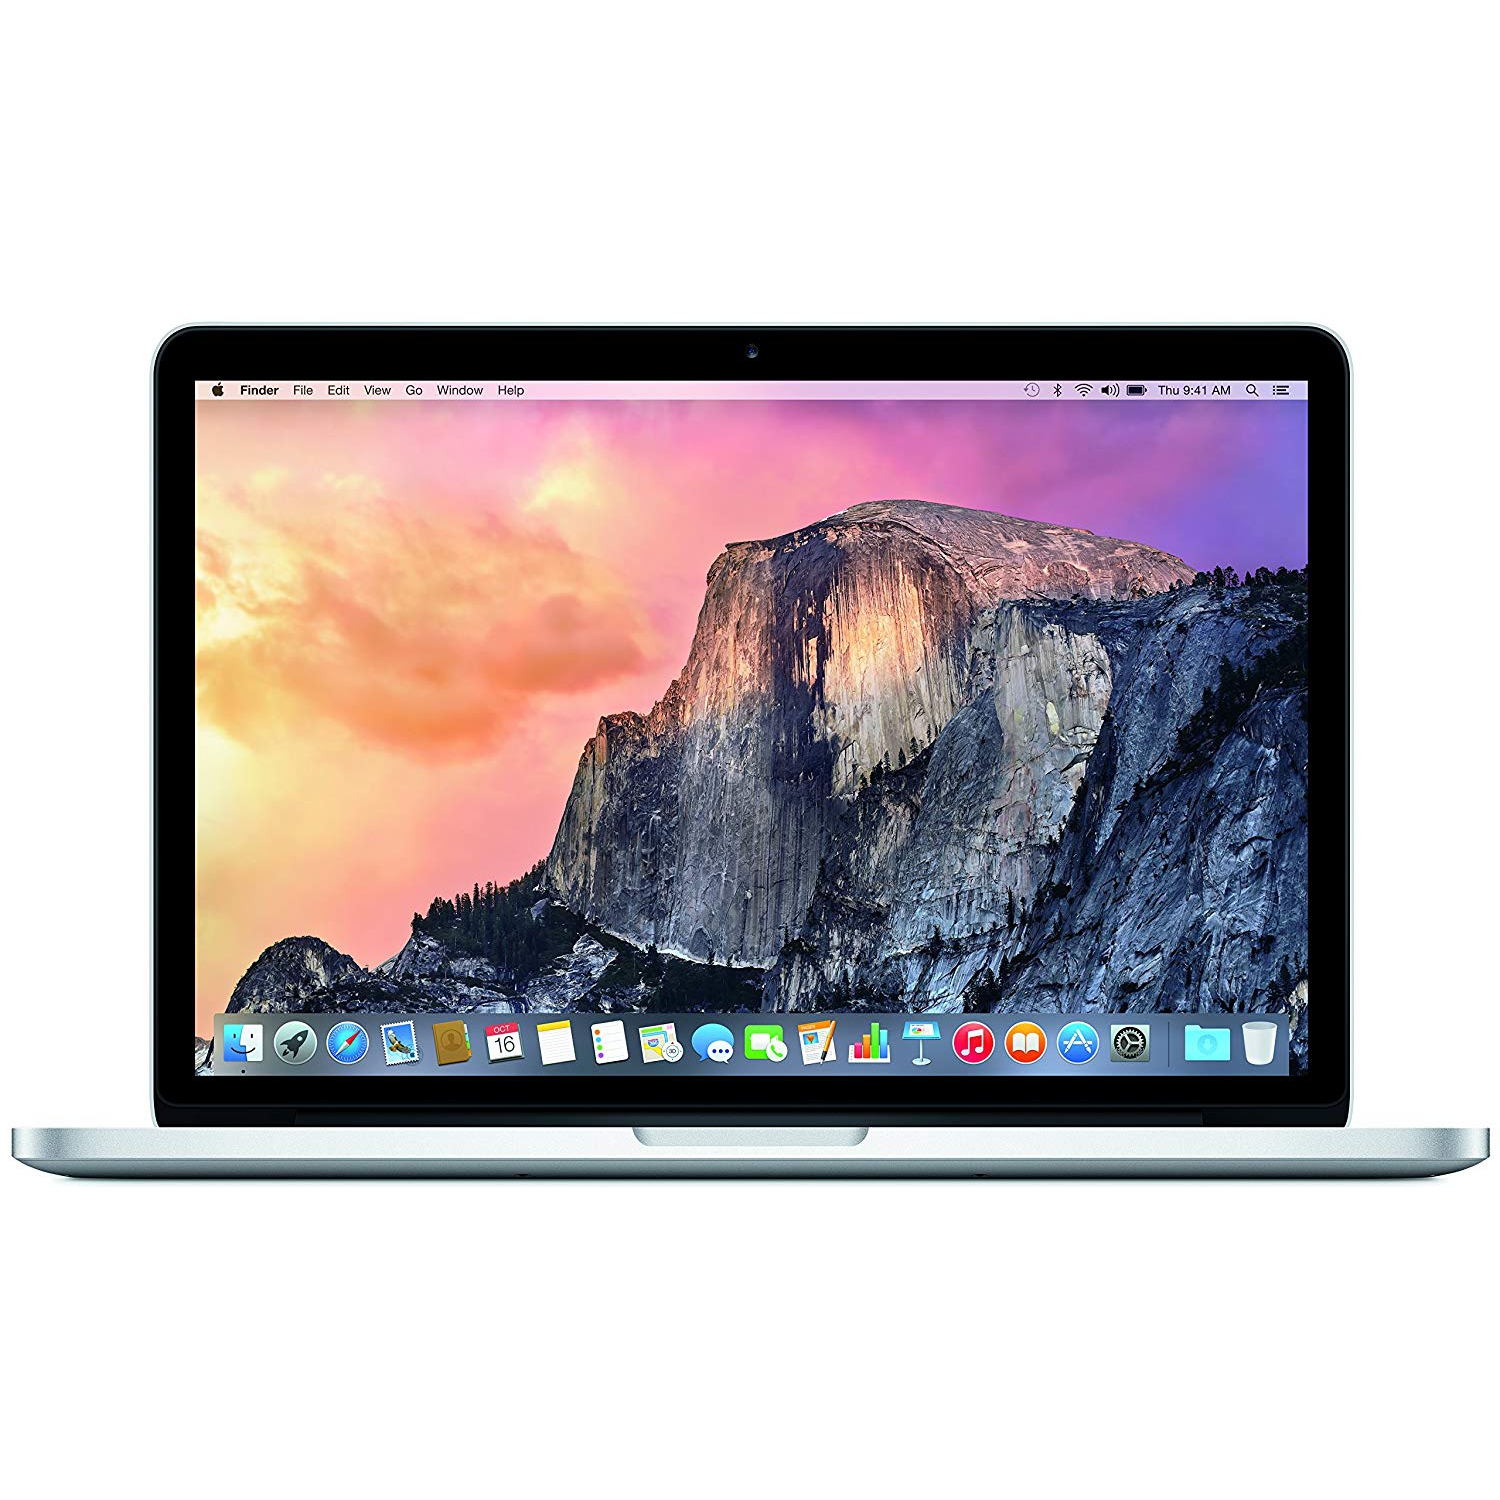 Refurbished (Good) - Apple Macbook Pro 13